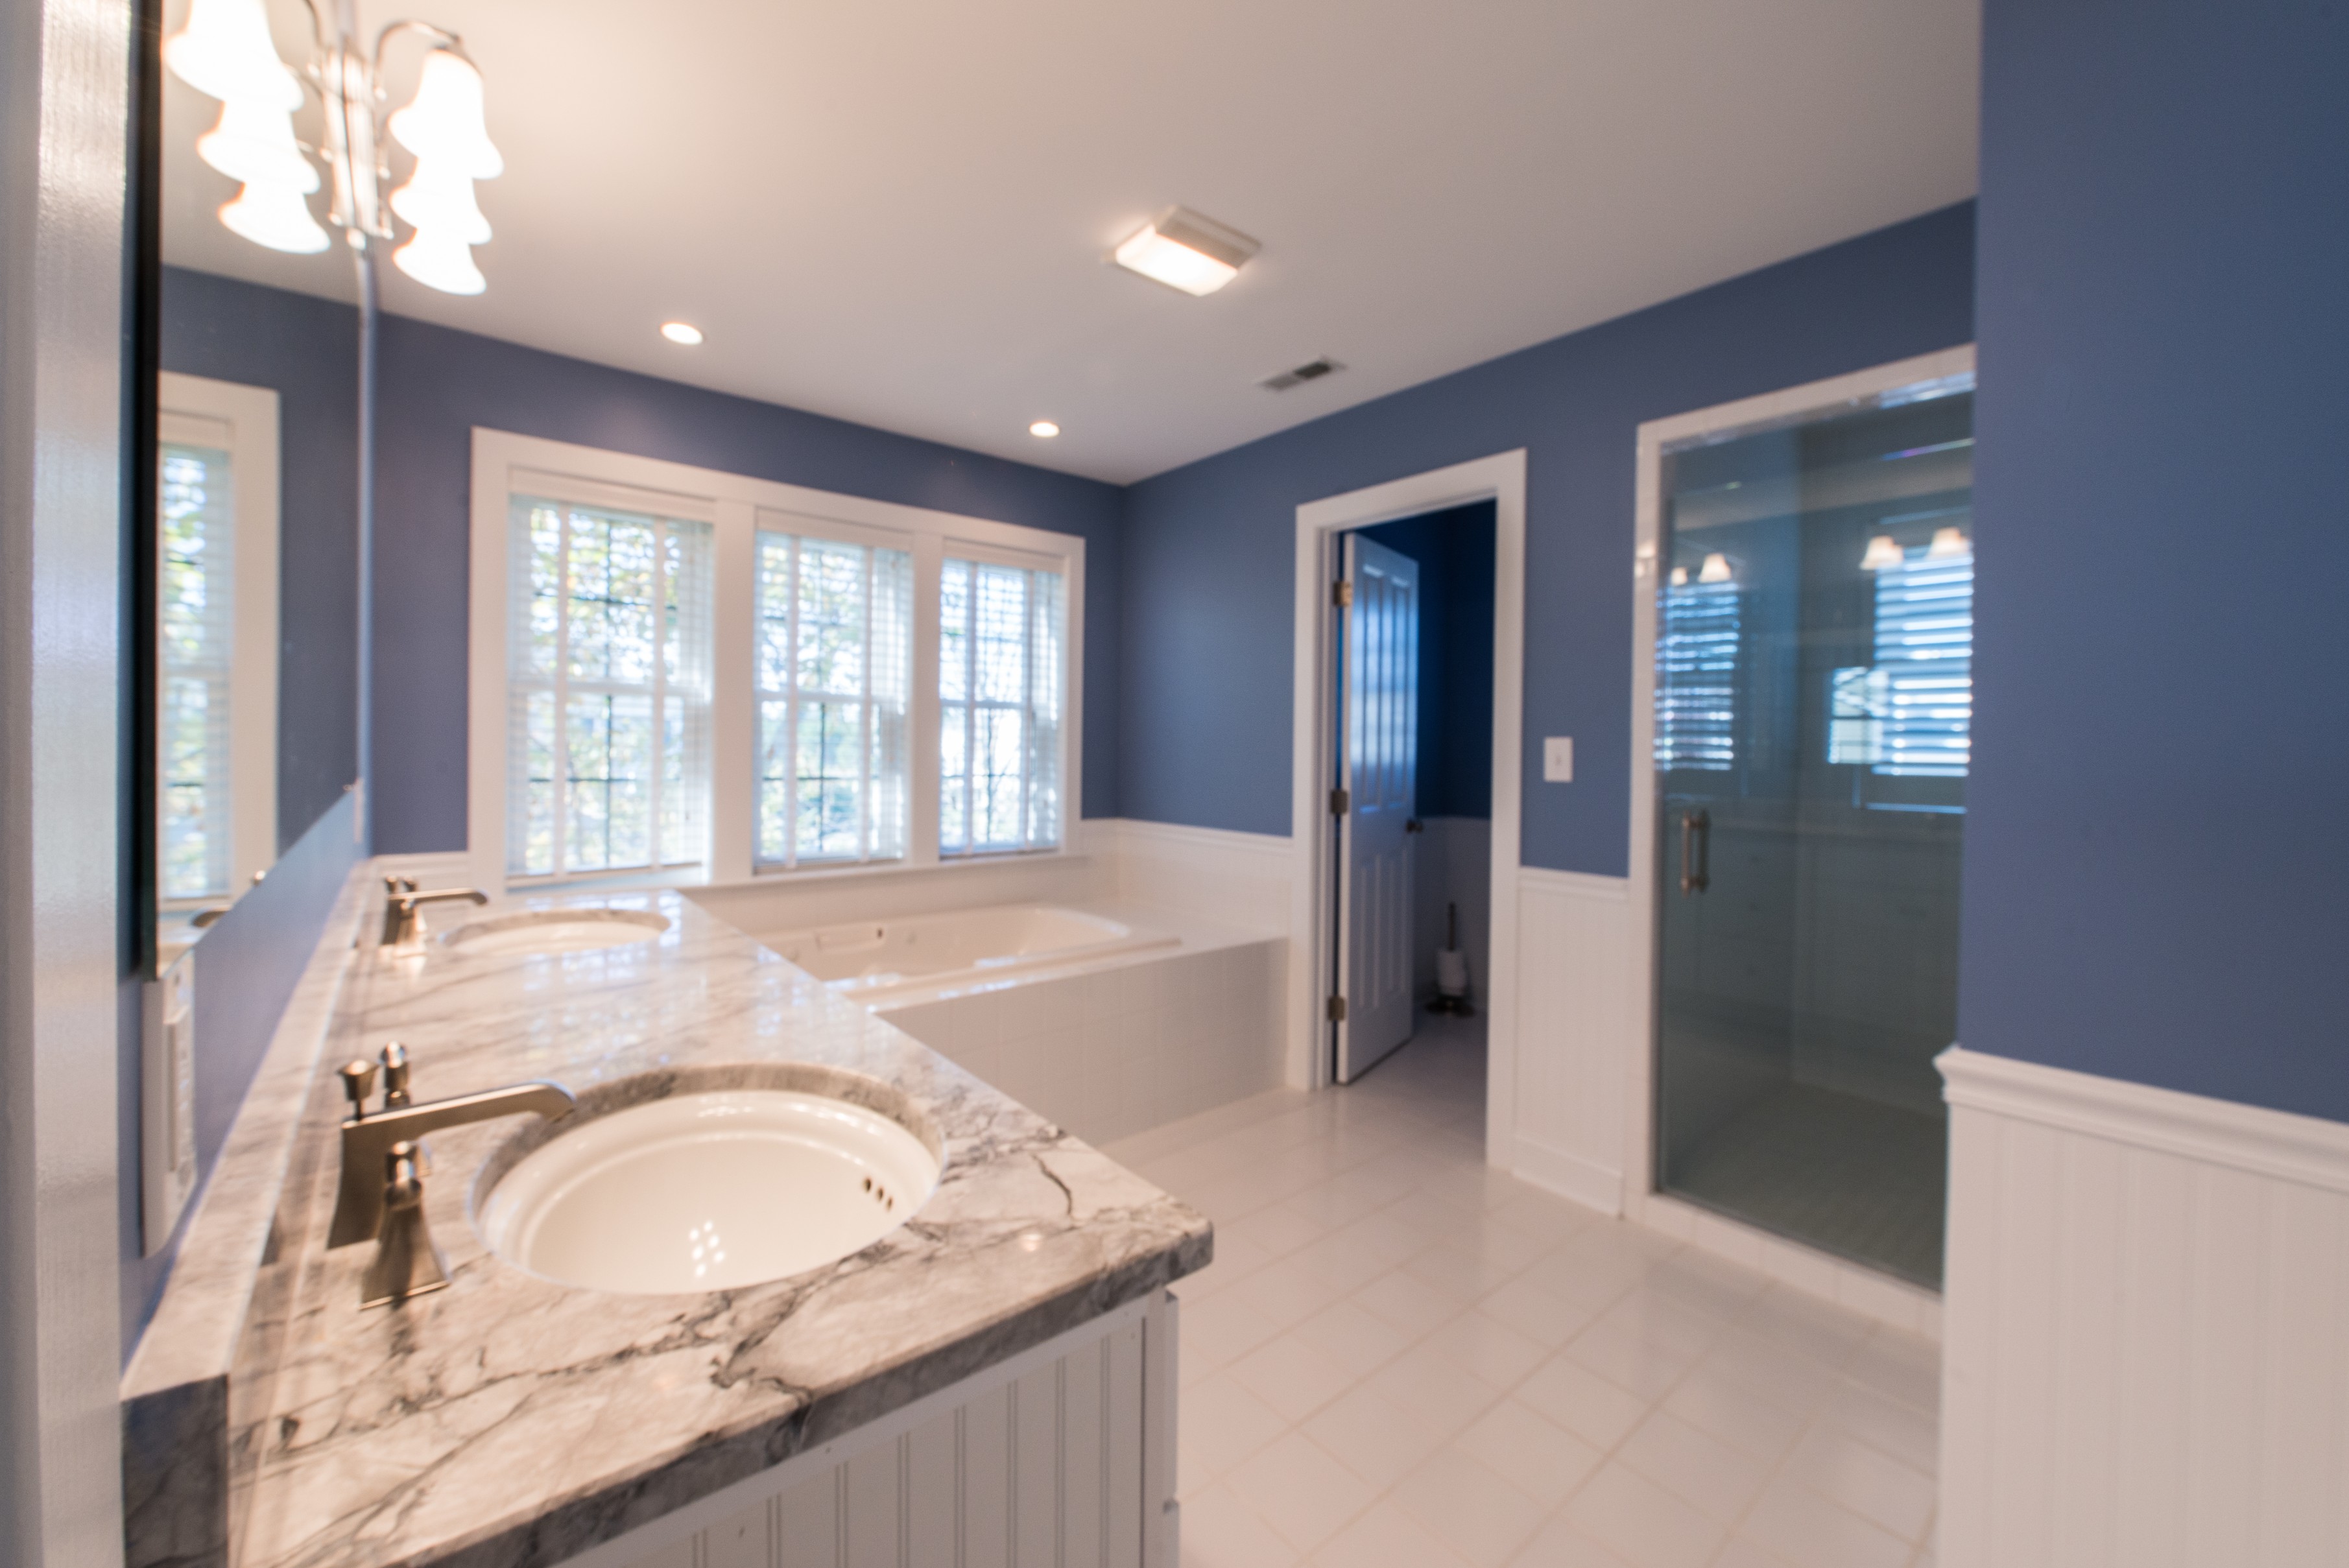 Bathroom Remodel in Ocean Ridge, Bethany Beach DE with Purple Walls, Undermount Two Sinks and White Tile Floor